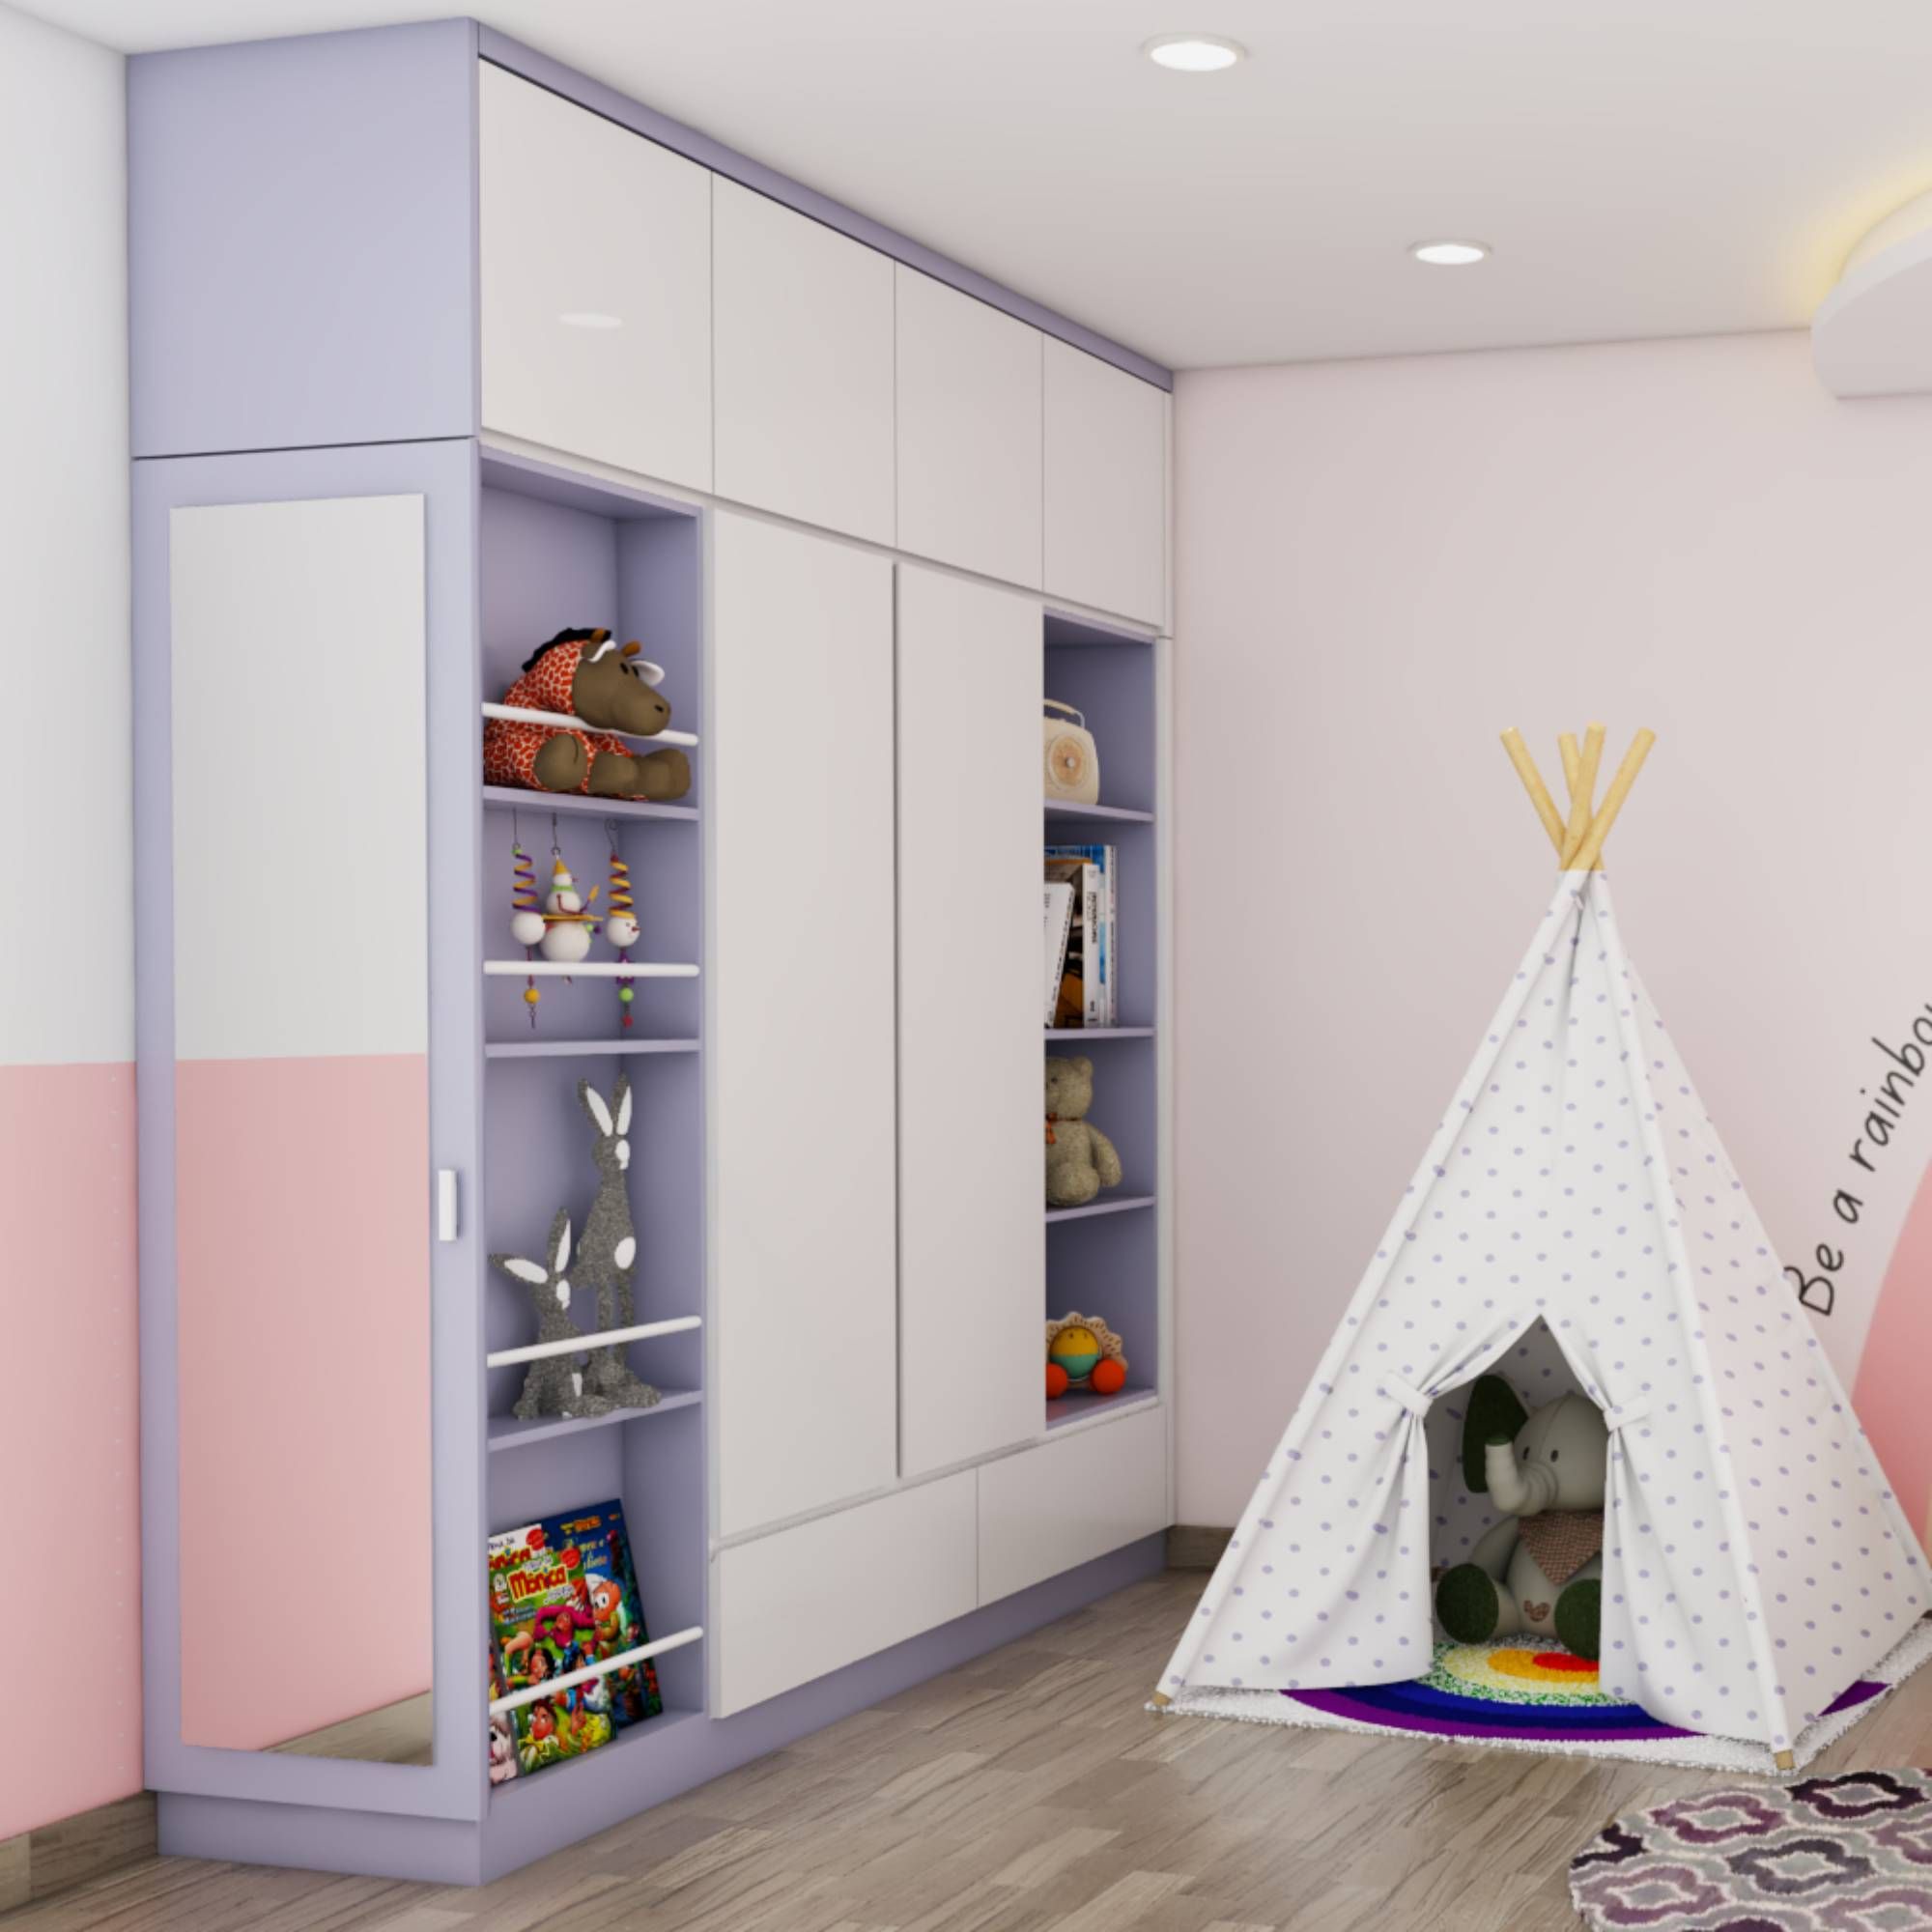 Modern 2-Door Swing Wardrobe Design In White Pink And Purple